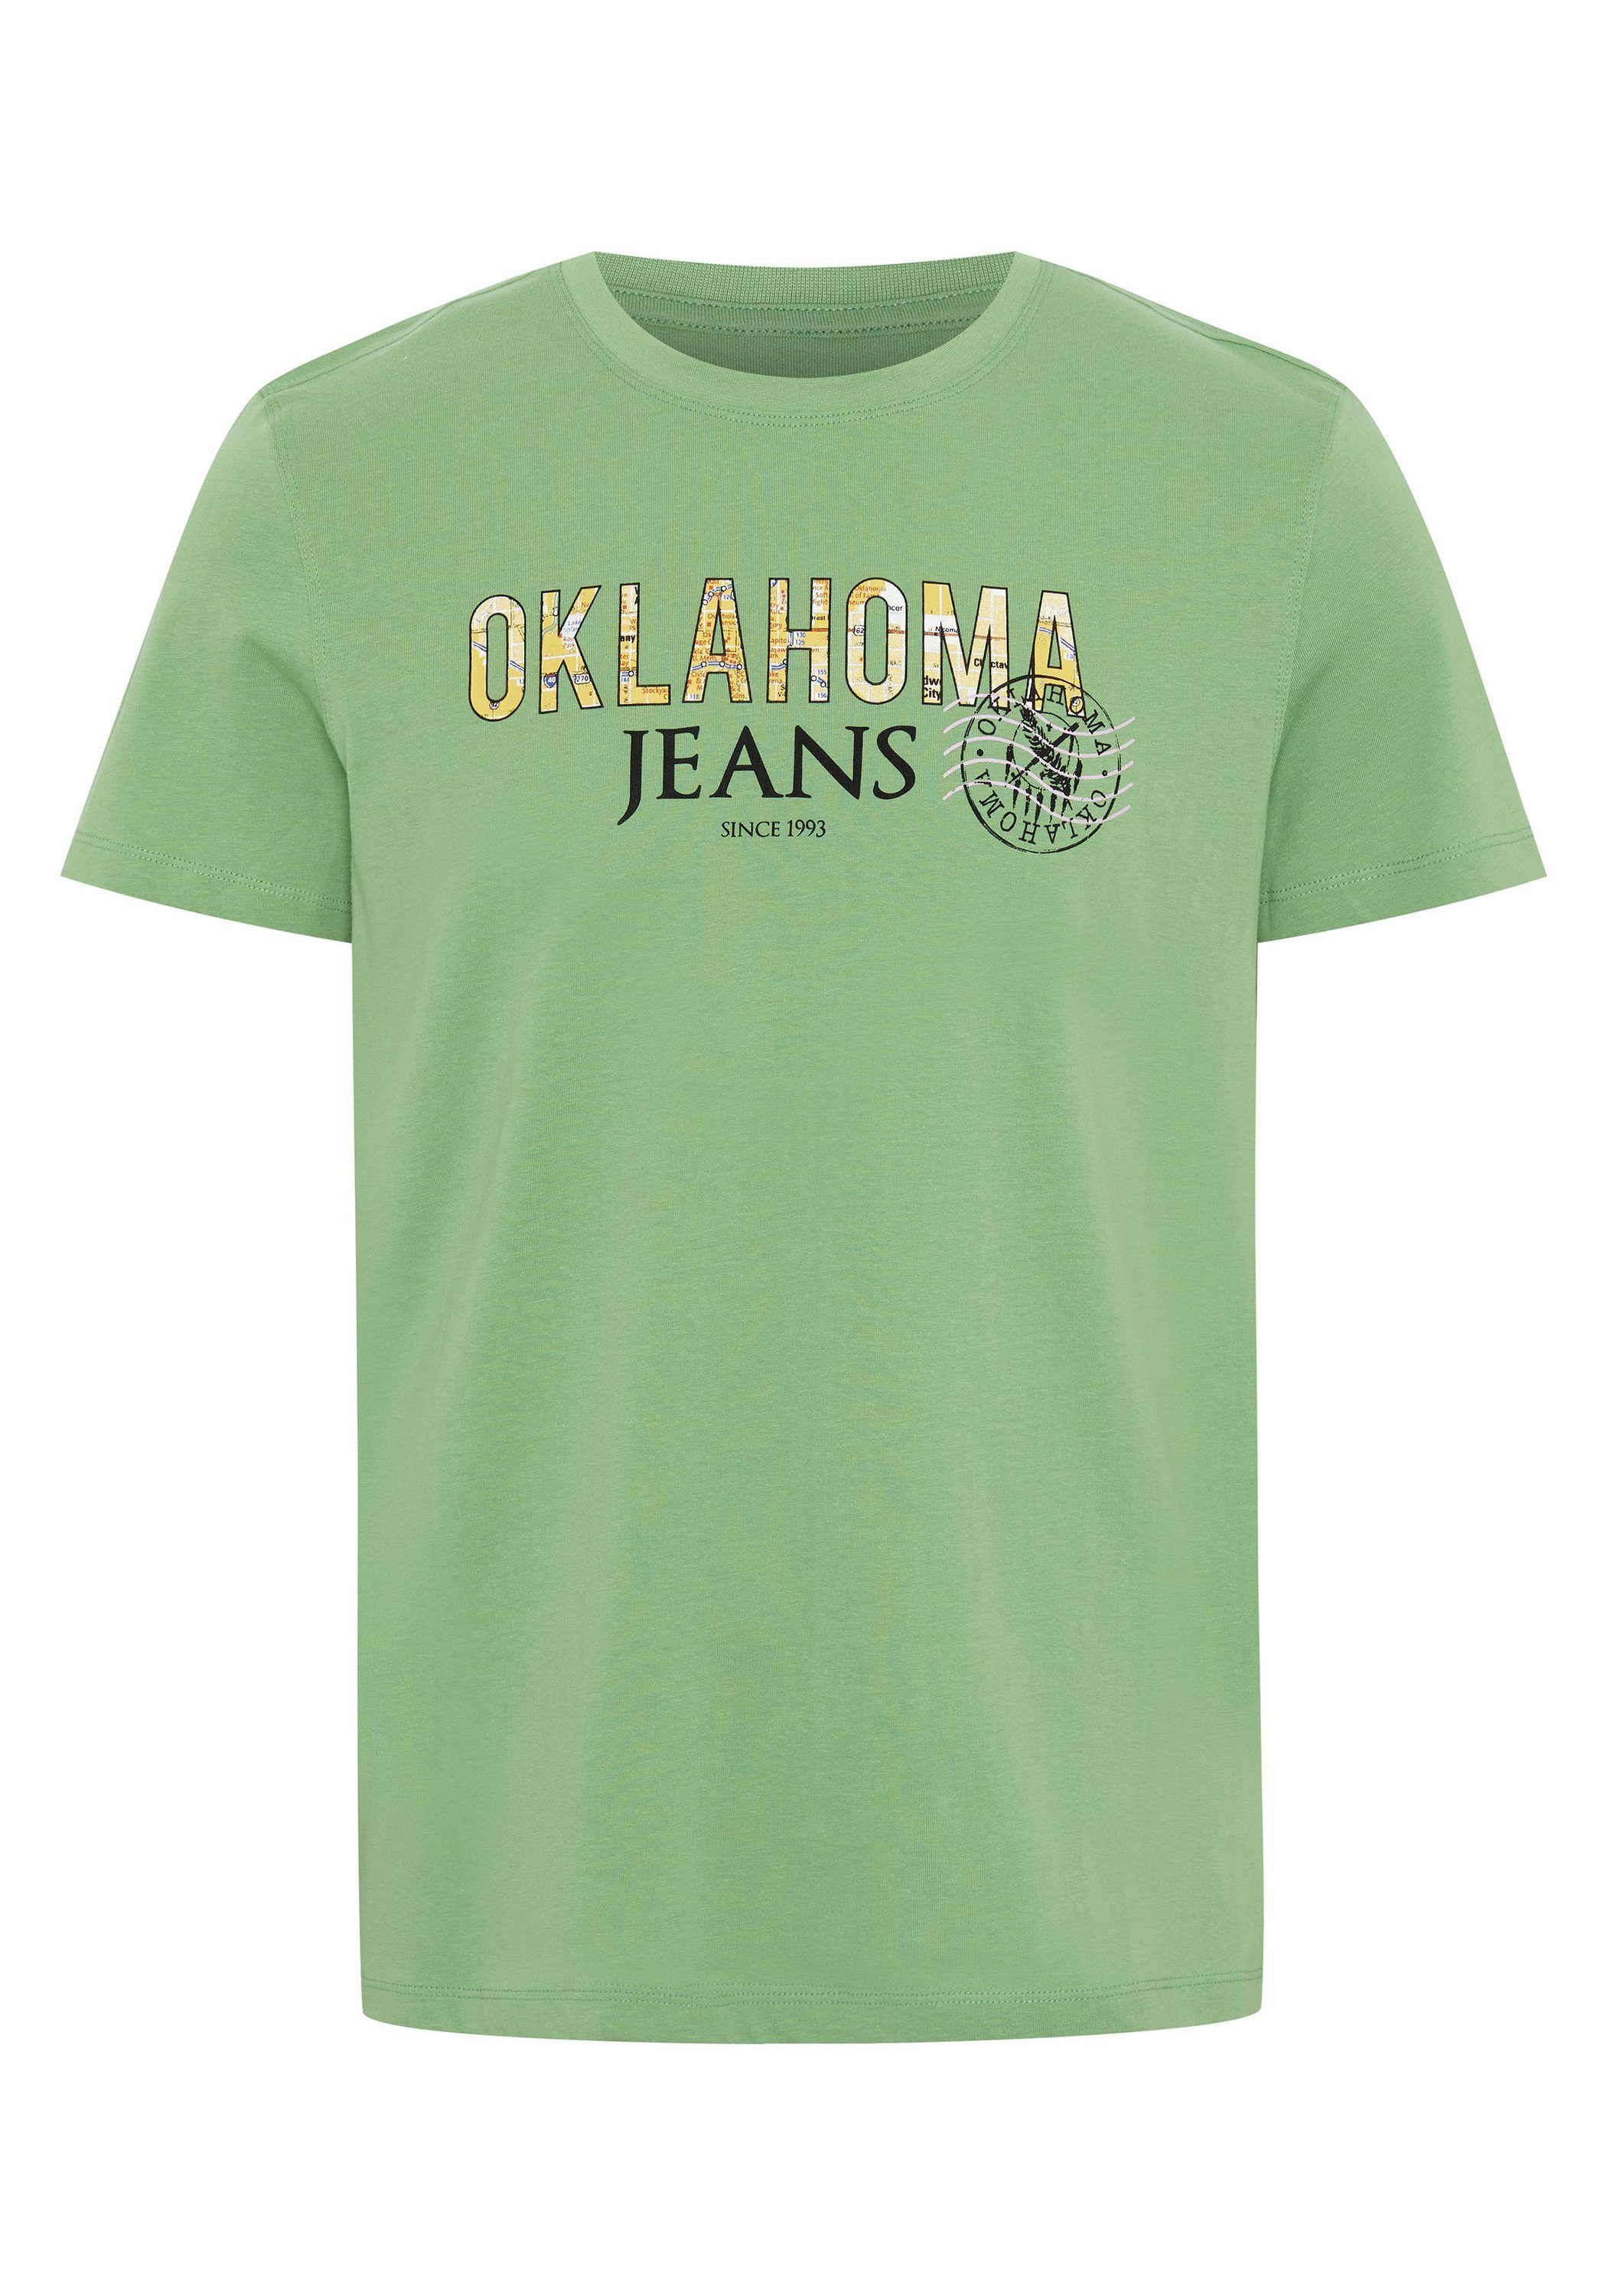 Oklahoma Jeans Print-Shirt mit Label-Print im City-Map-Look 16-6116 Shale Green